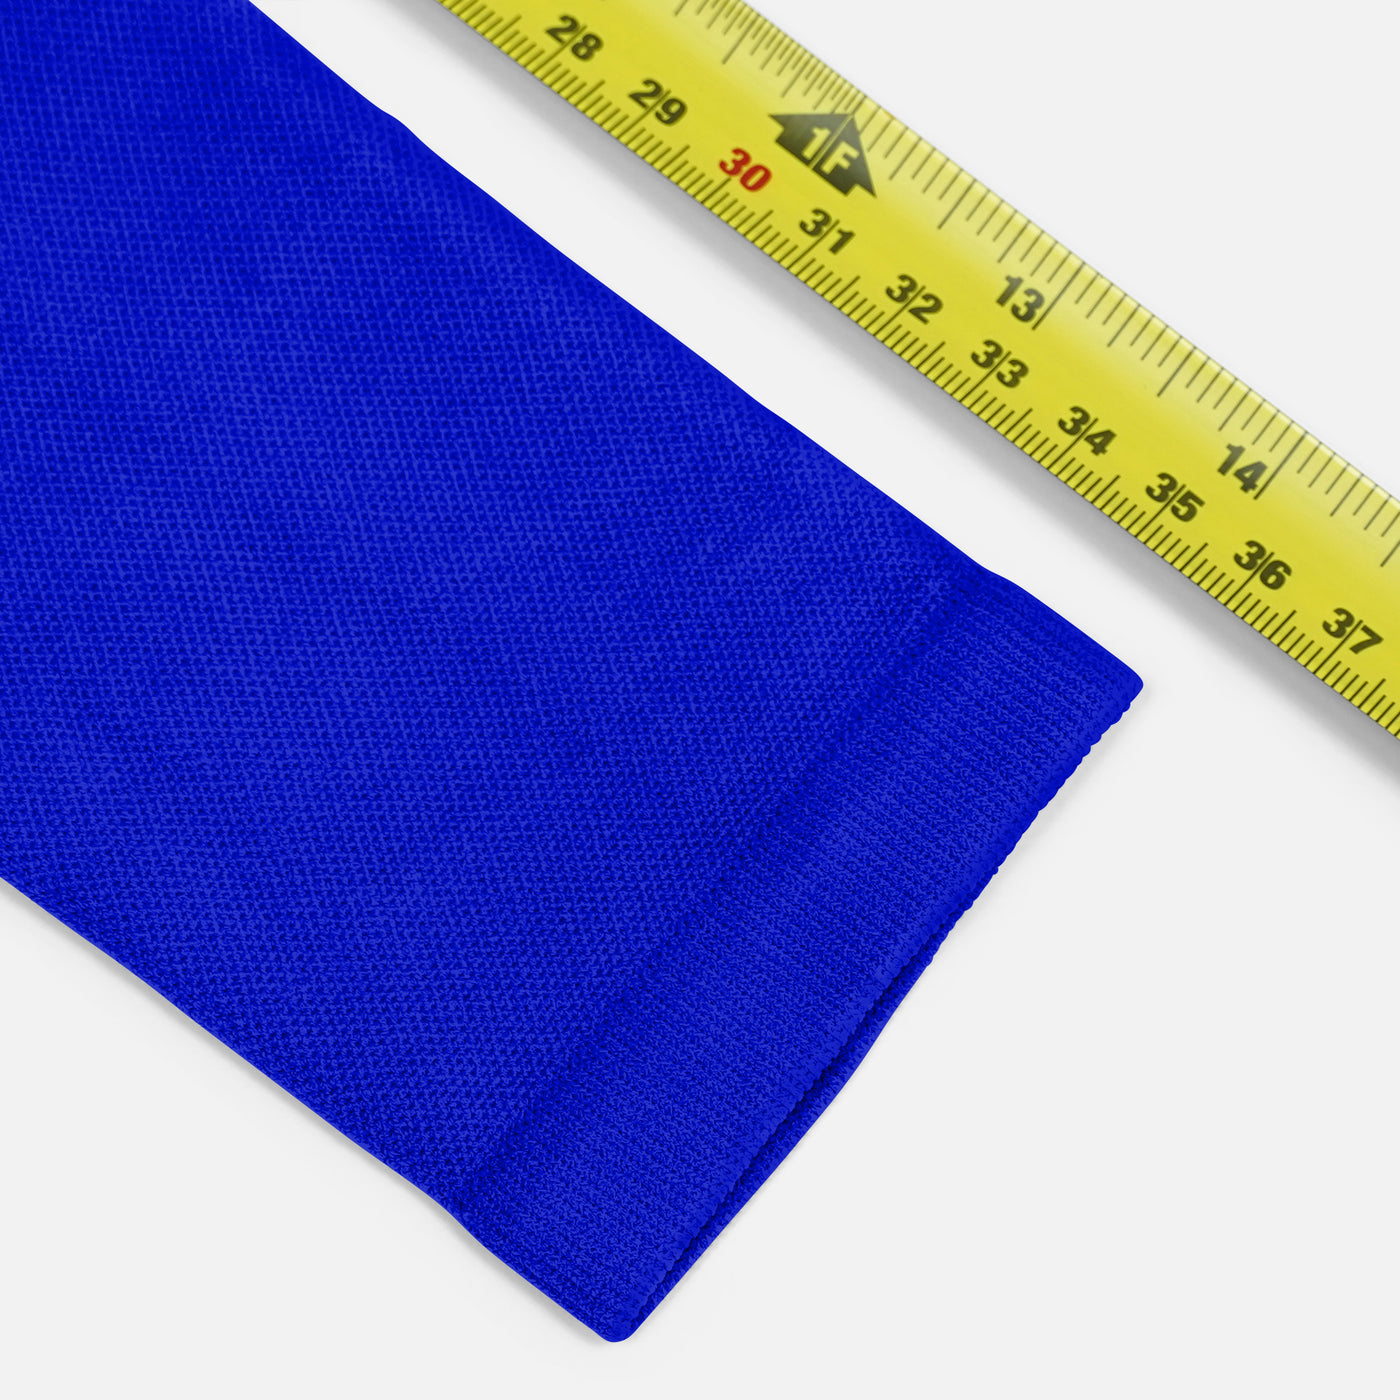 Hue Royal Blue One Size Fits All Football Arm Sleeve